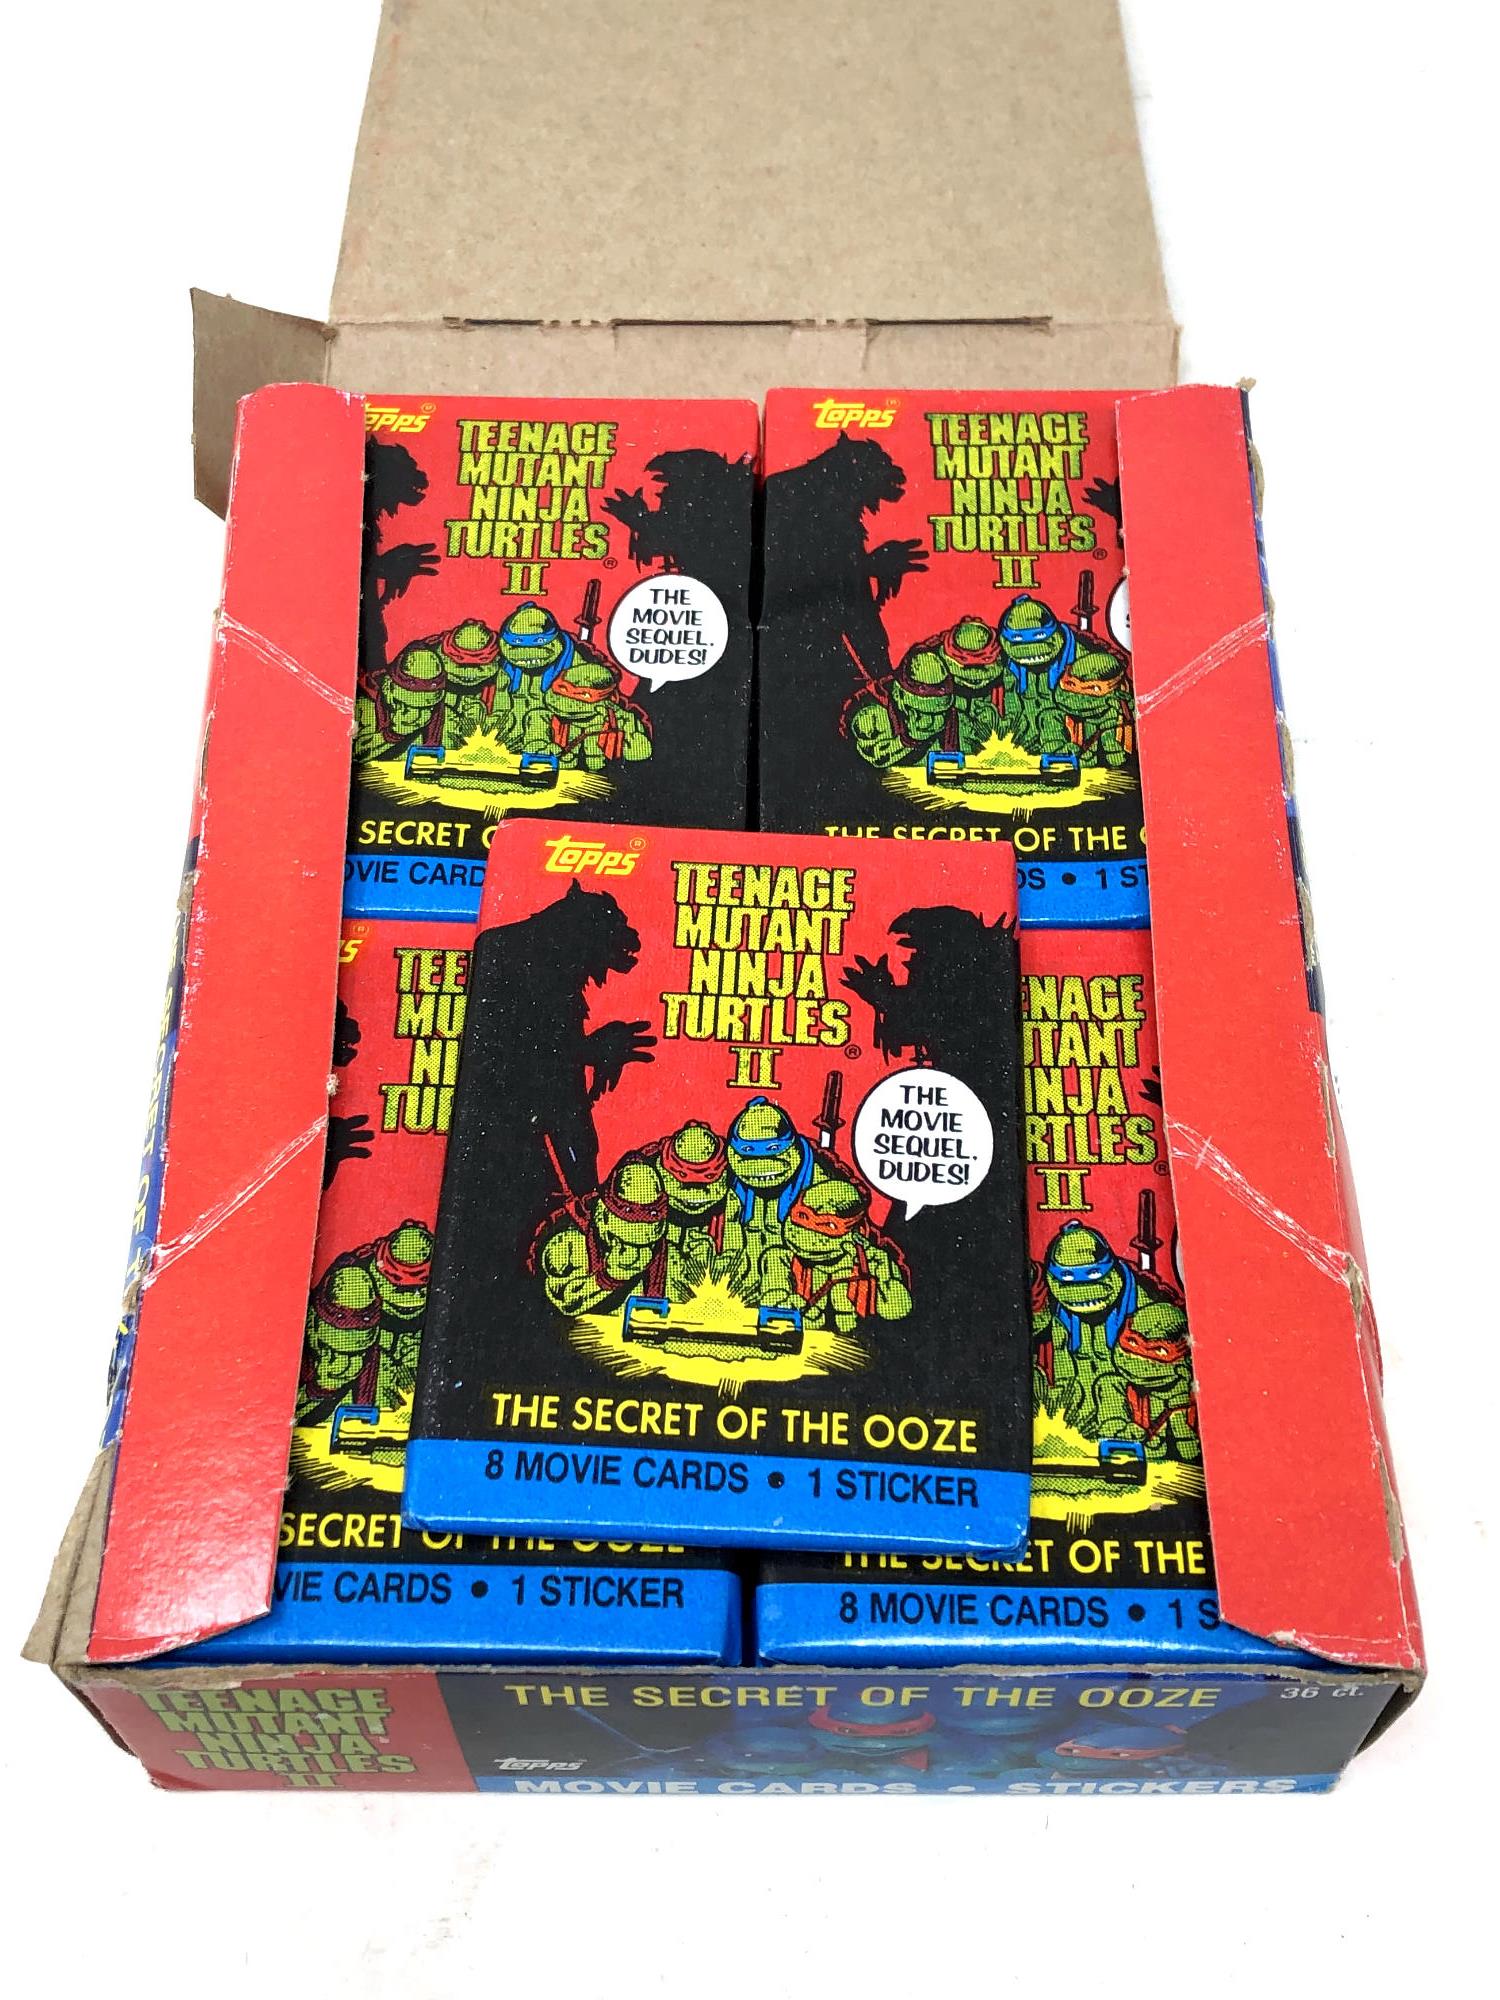 Vintage Topps Cards - Full 36 pack of Teenage Mutant Ninja Turtles II 1991 sticker packs, - Image 2 of 2